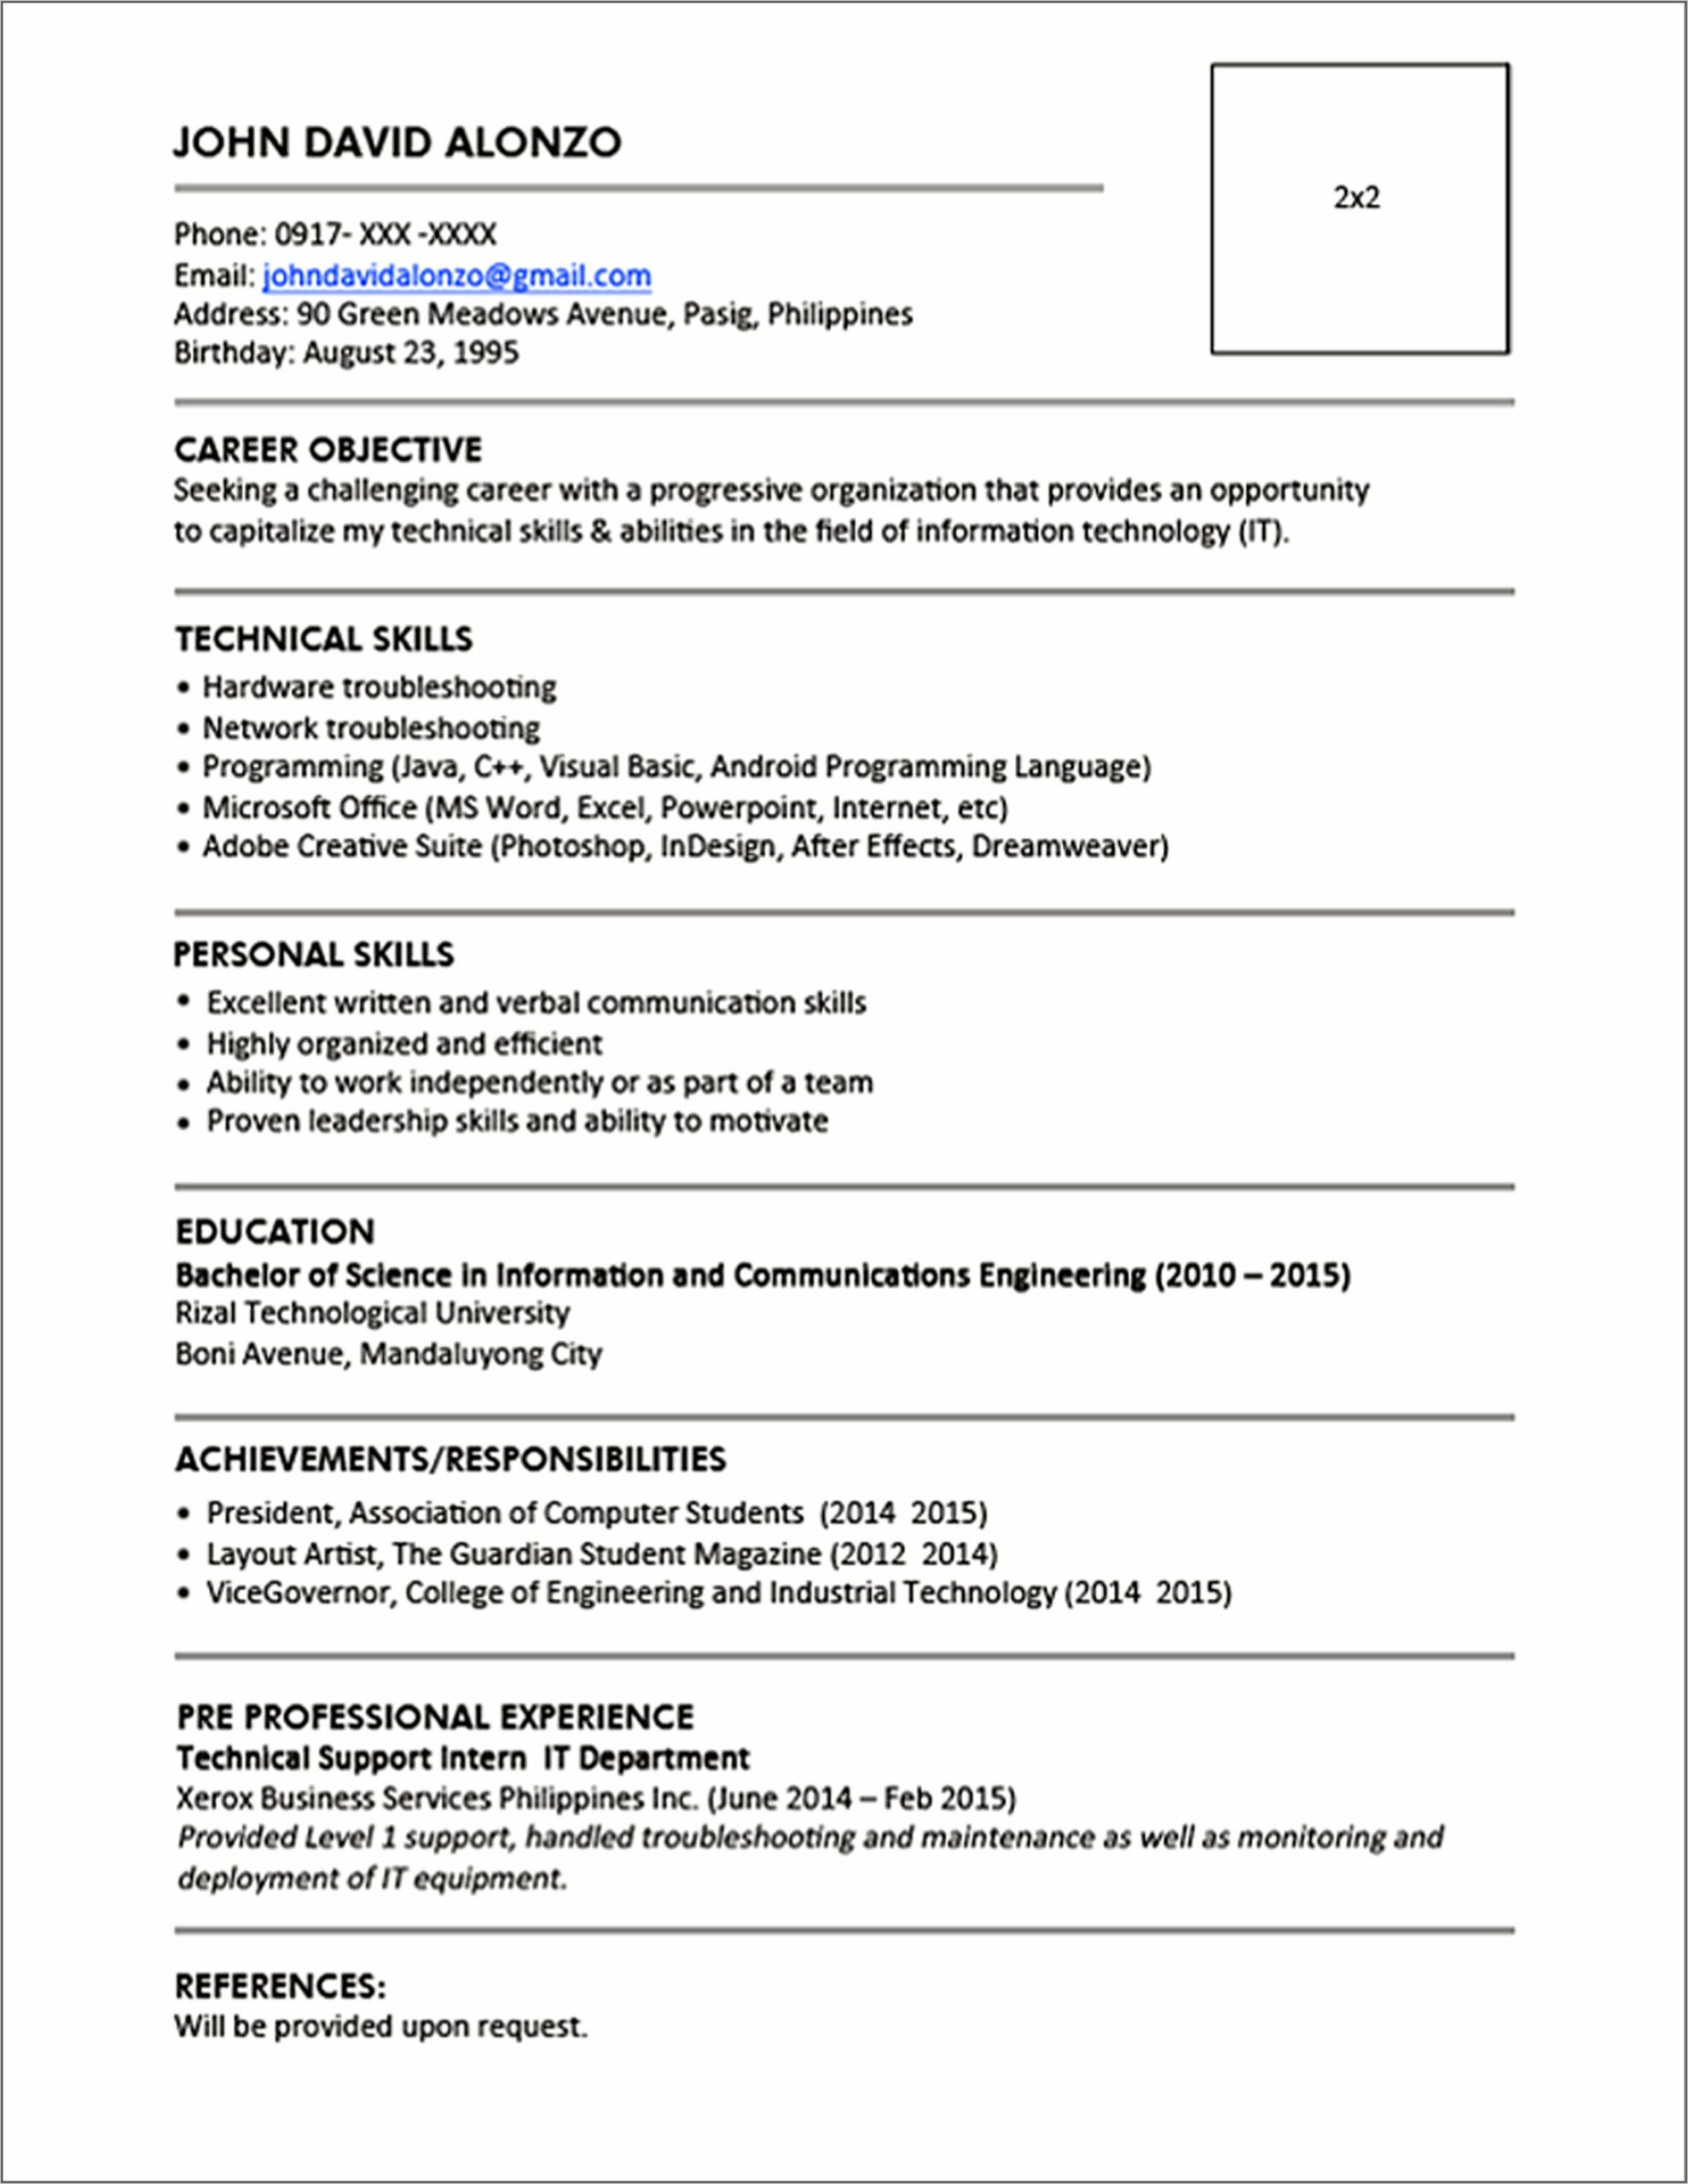 New Resume Format 2014 Pdf Free Download